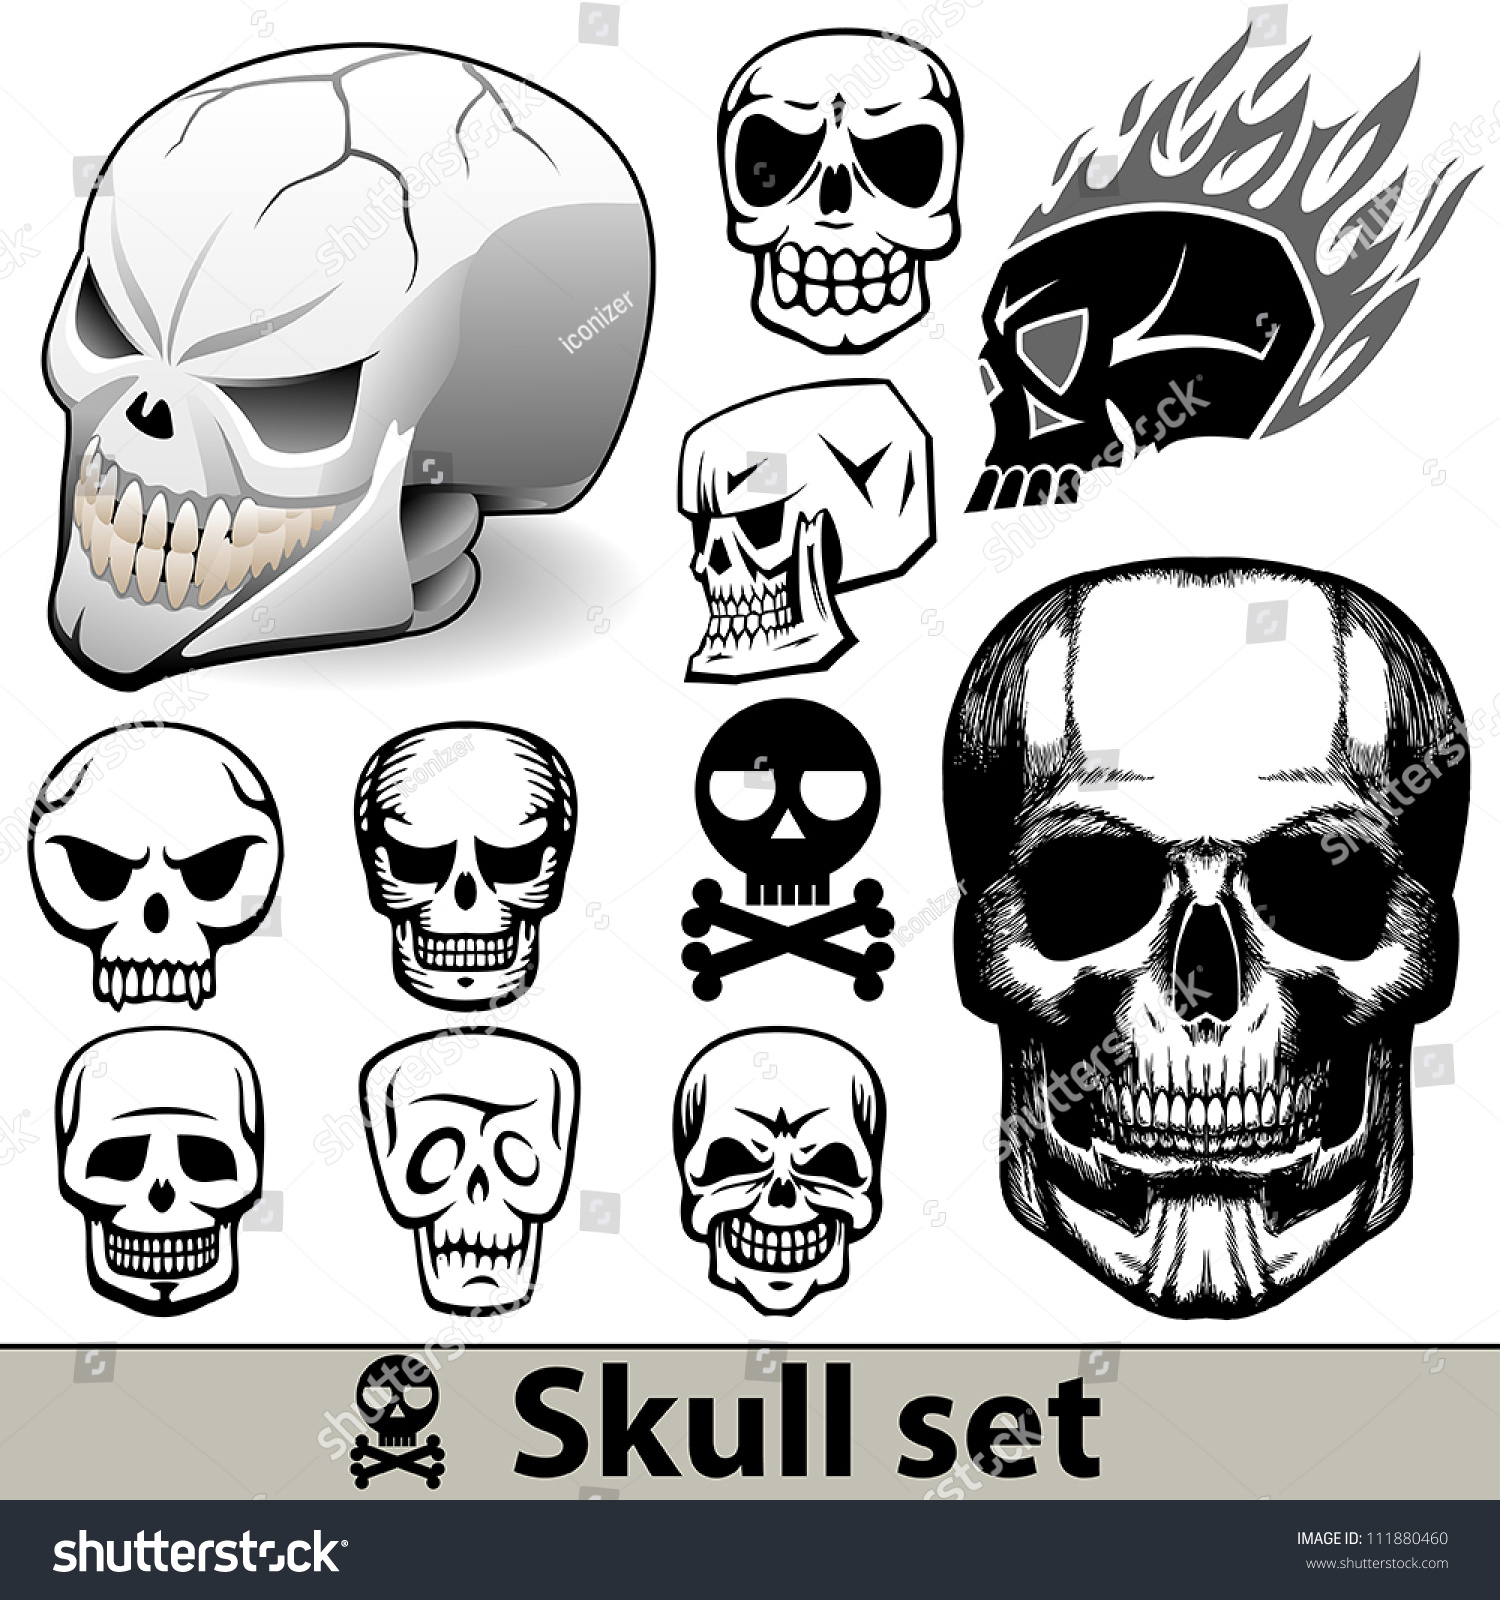 Skull Vector Set Stock Vector 111880460 - Shutterstock